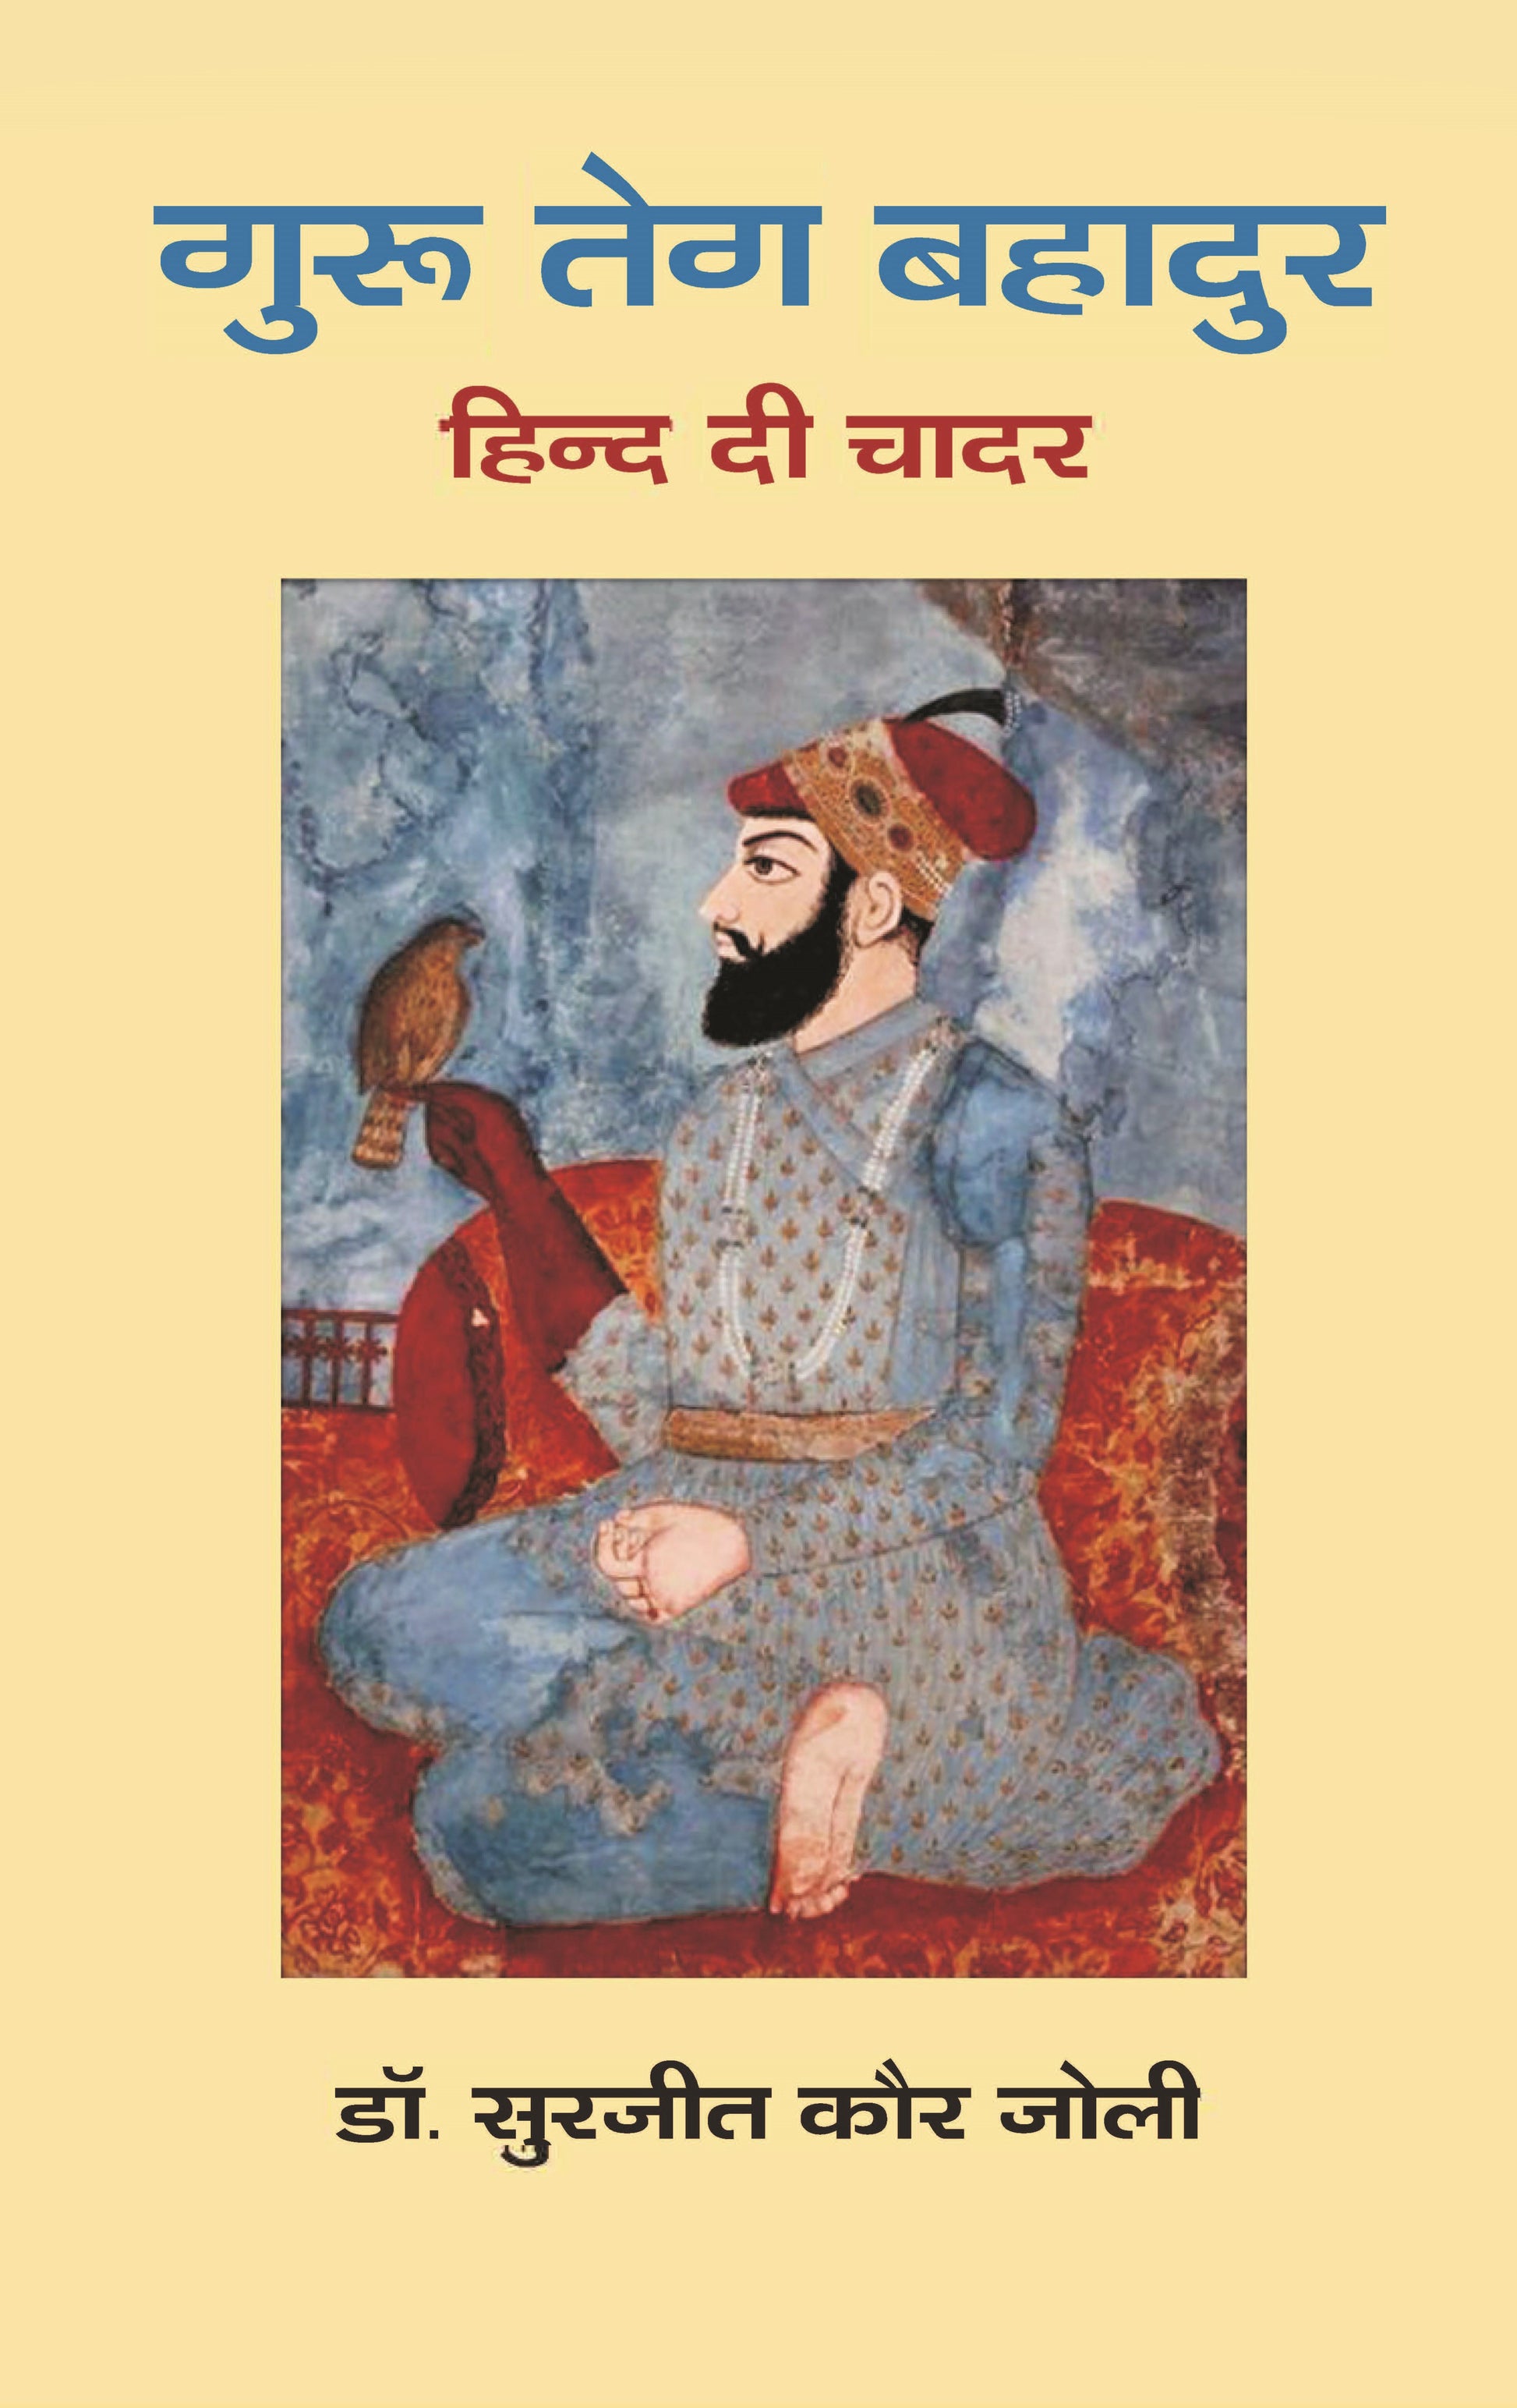 गुरू तेग बहादुर: हिन्द दी चादर (Guru Teg Bahadur: Hind Di Chadar)